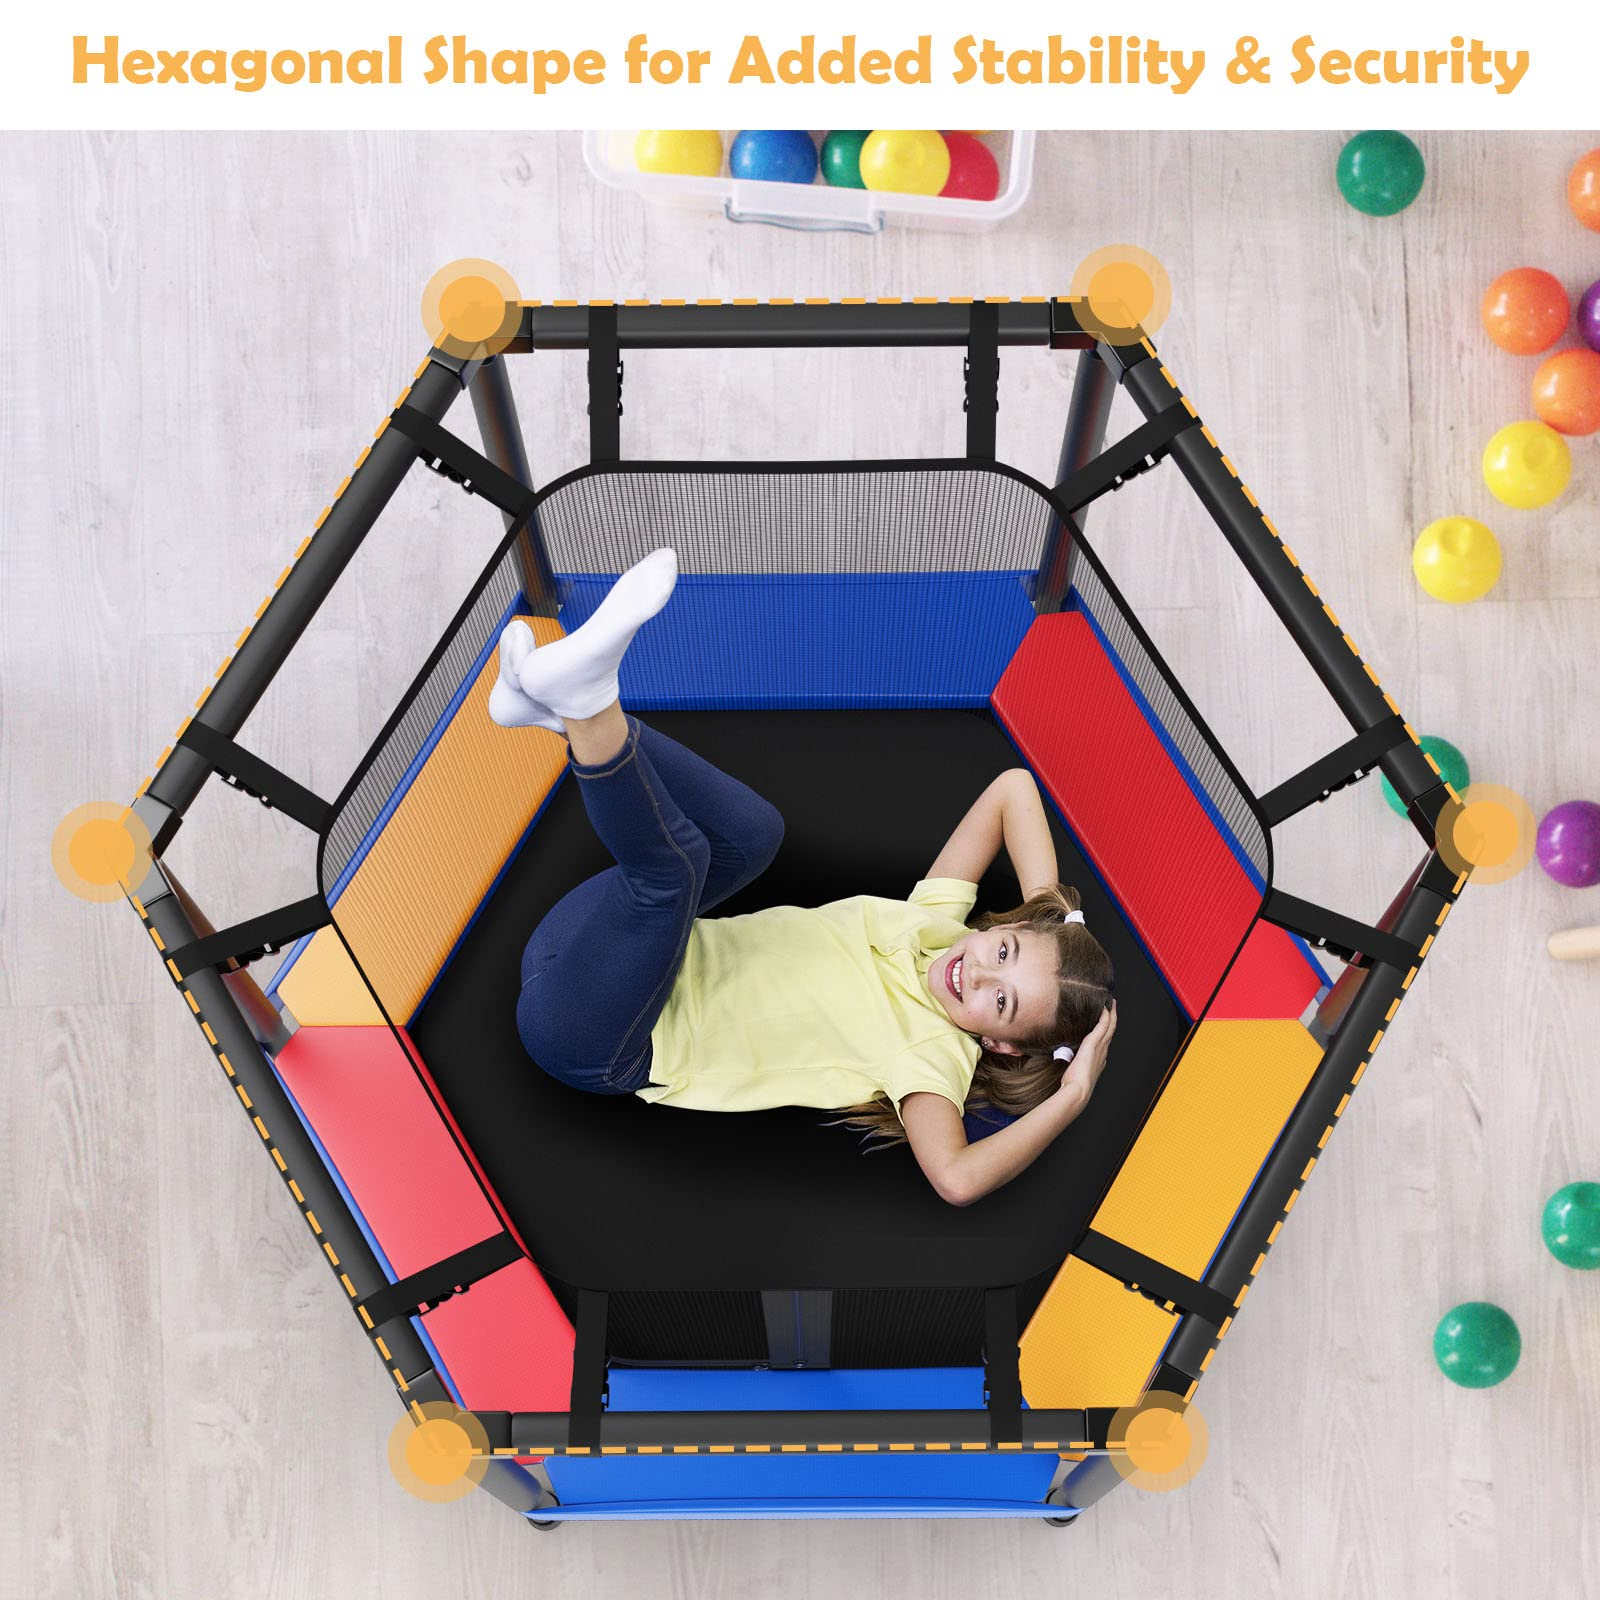 Outdoor Indoor Mini Recreational Round Trampoline w/ Safety Enclosure Net